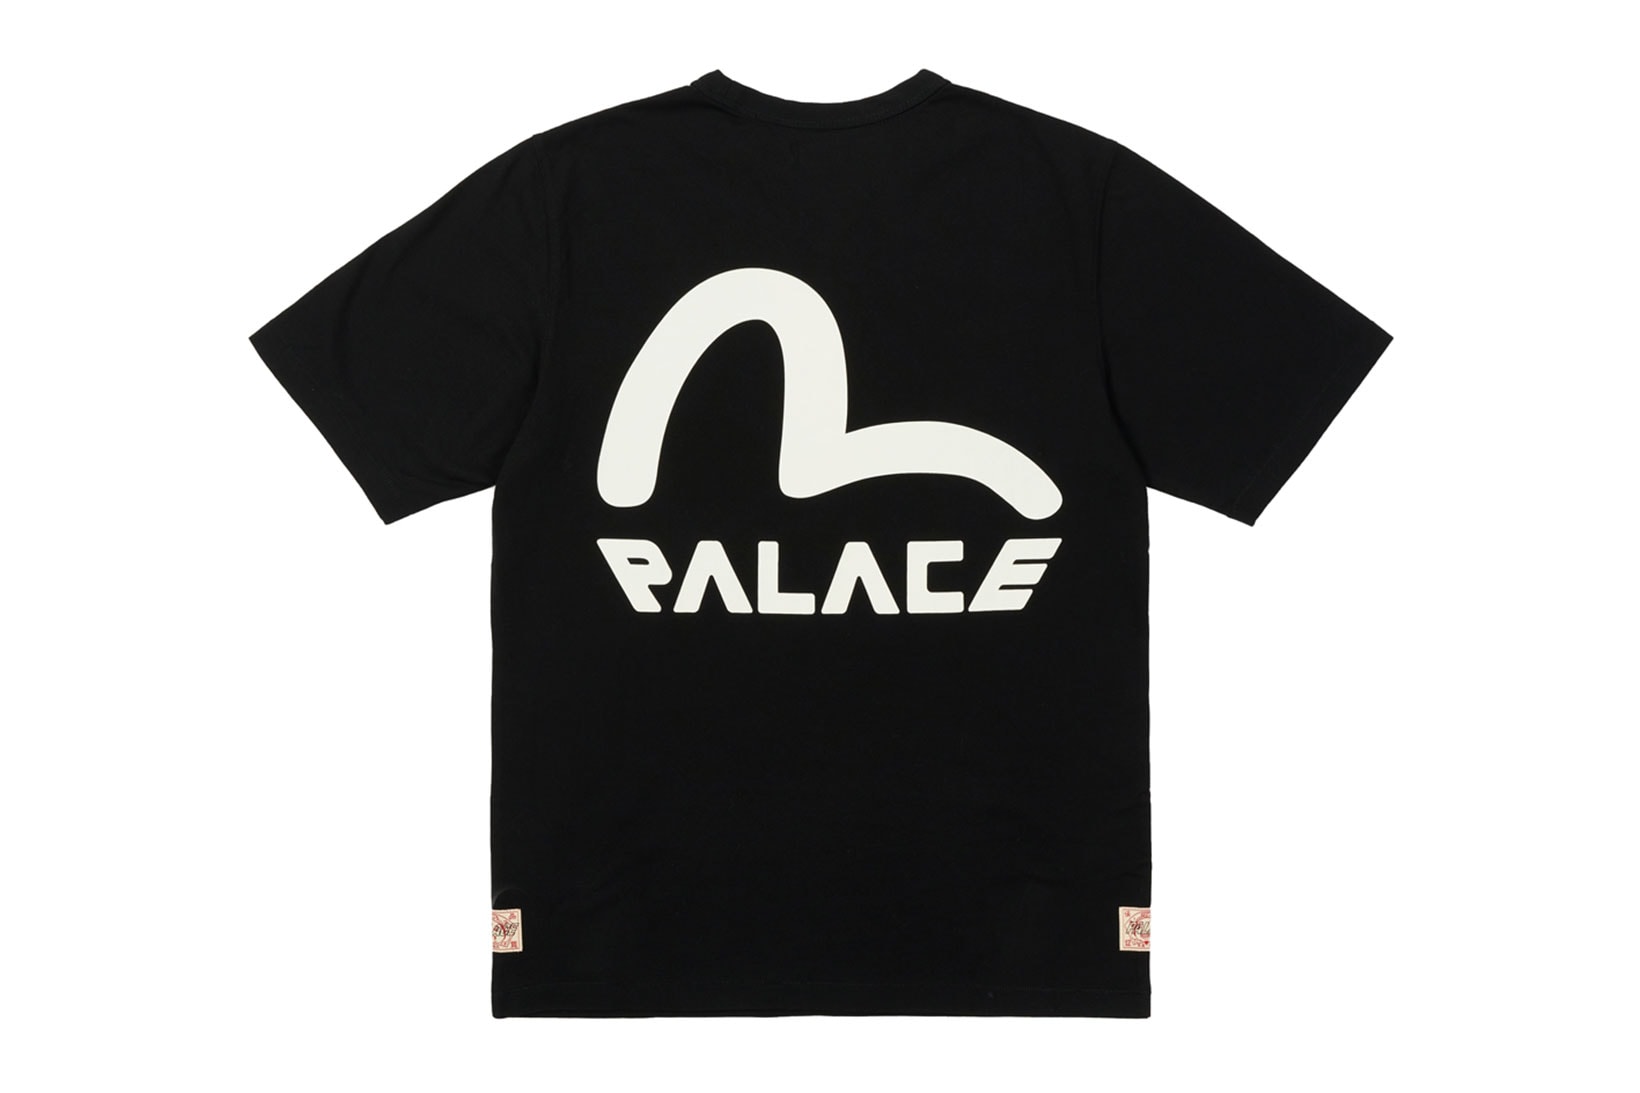 Palace Skateboards Evisu FW21 Collaboration T-shirt